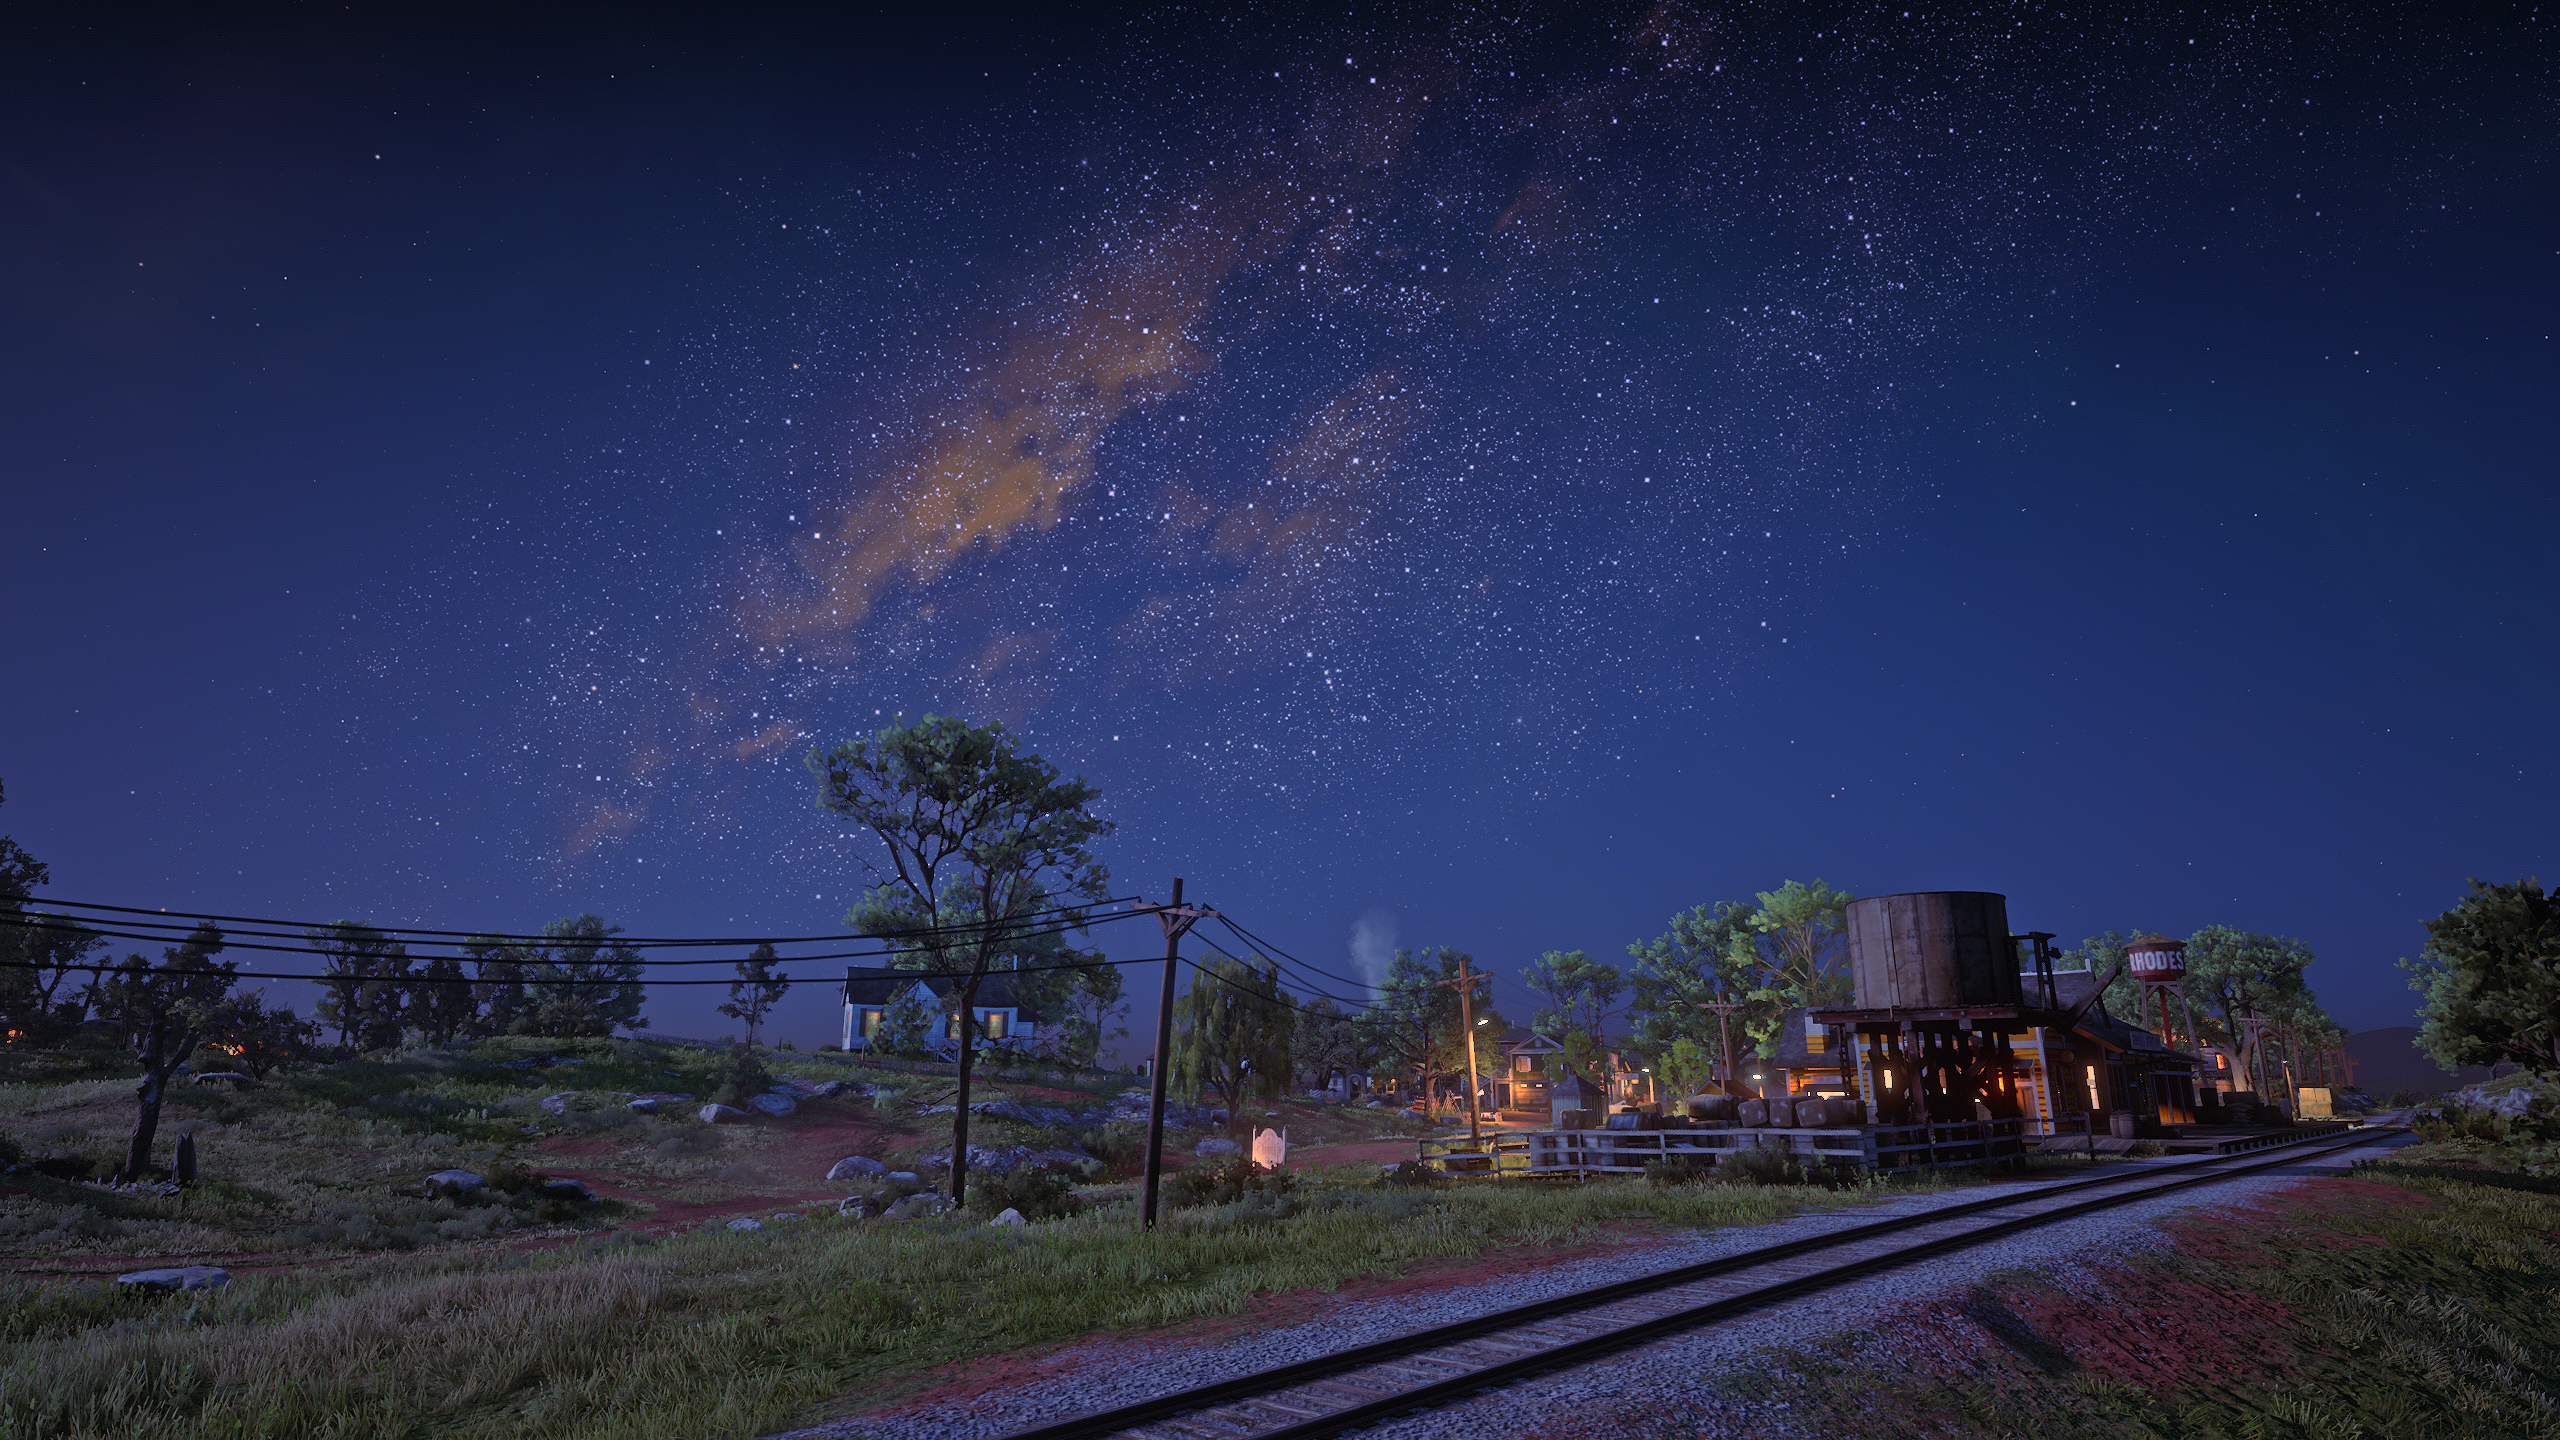 General 2560x1440 Red Dead Redemption 2 Rockstar Games video games nature landscape night sky stars CGI sky